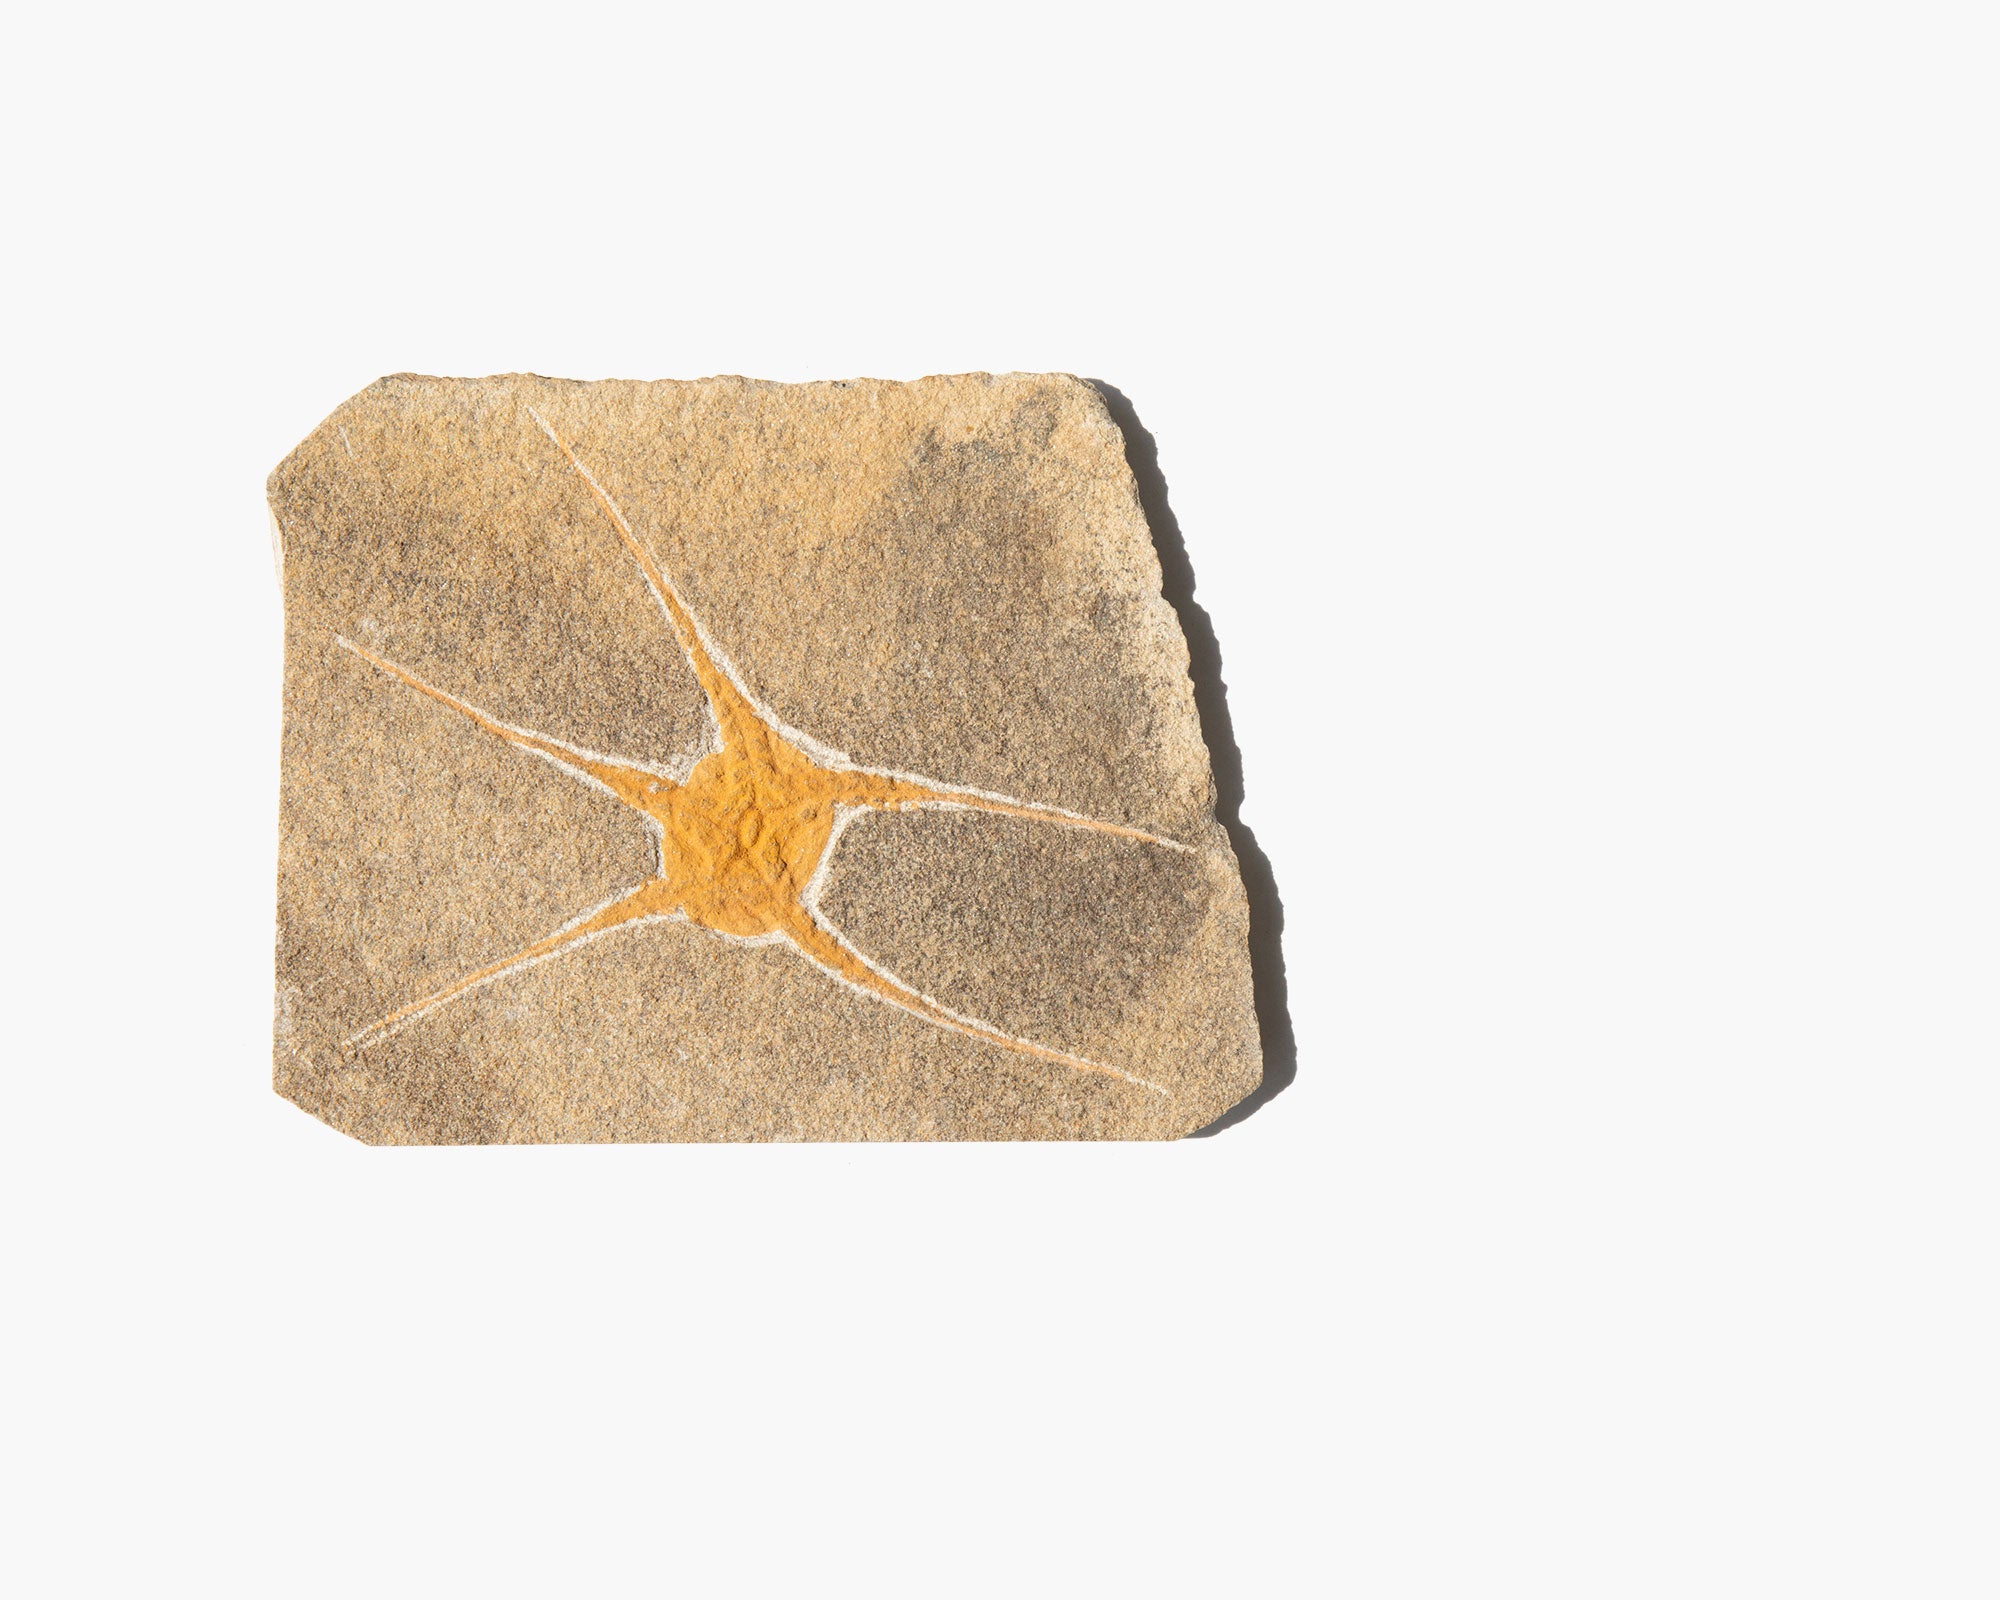 Brittle Star Fossil